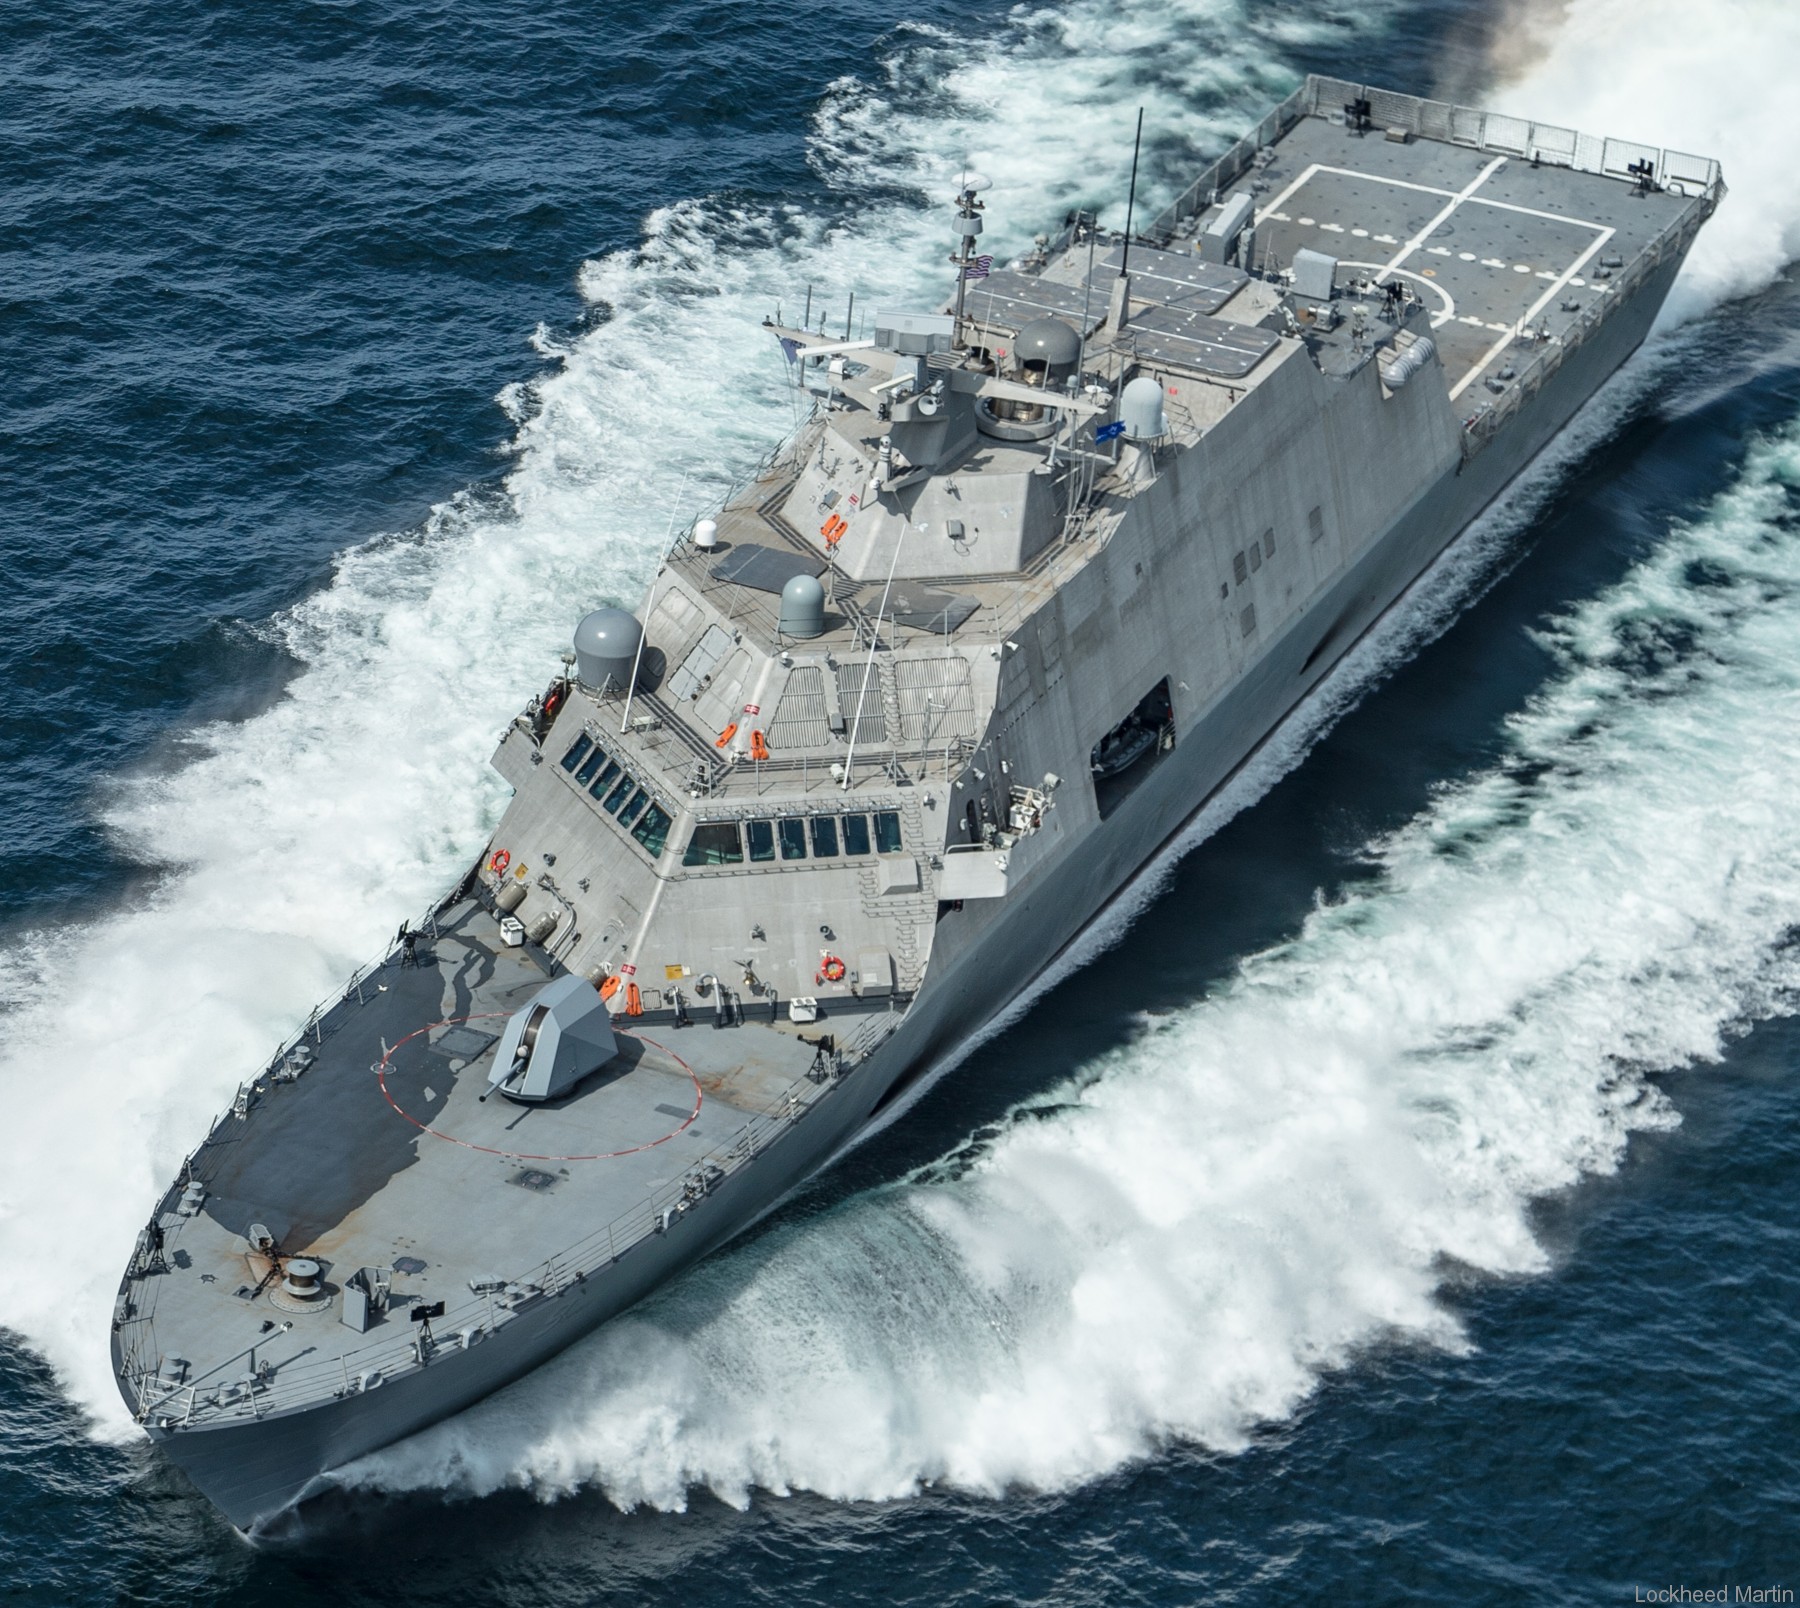 lcs-9 uss little rock freedom class littoral combat ship us navy 15a